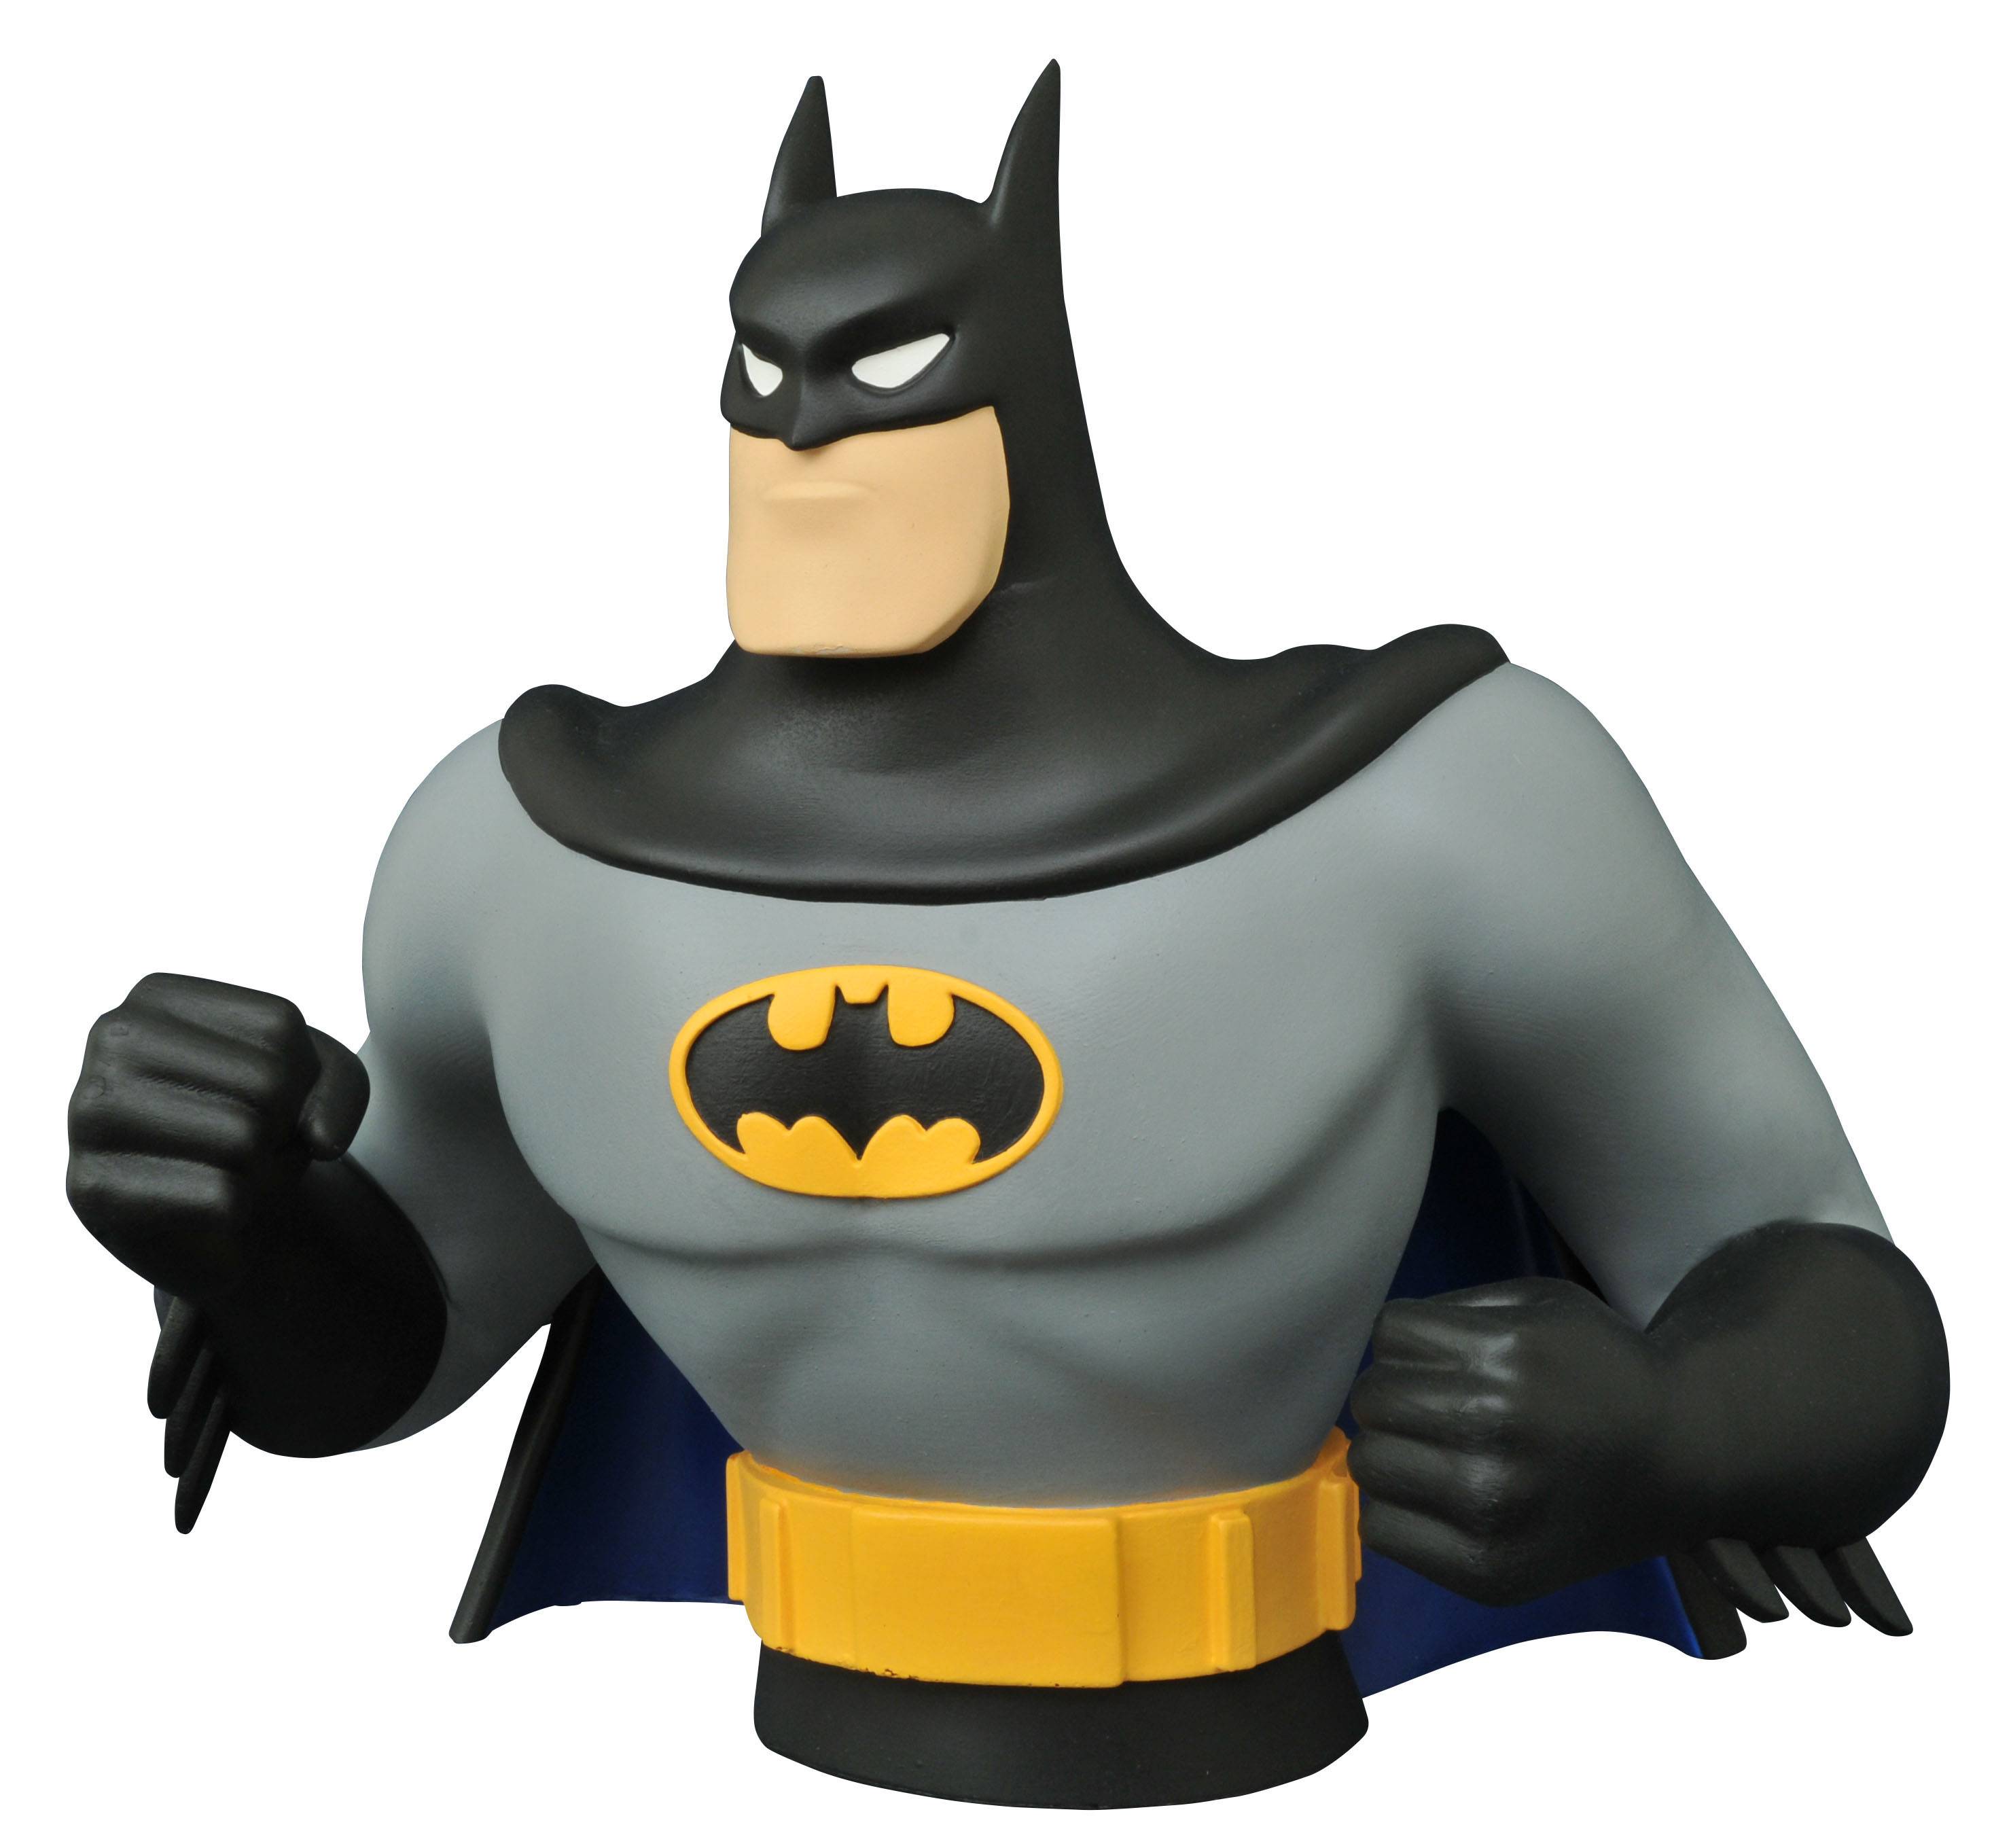 Buy Batman Tas Batman Bust Bank | New Dimension Comics - Pittsburgh Mills